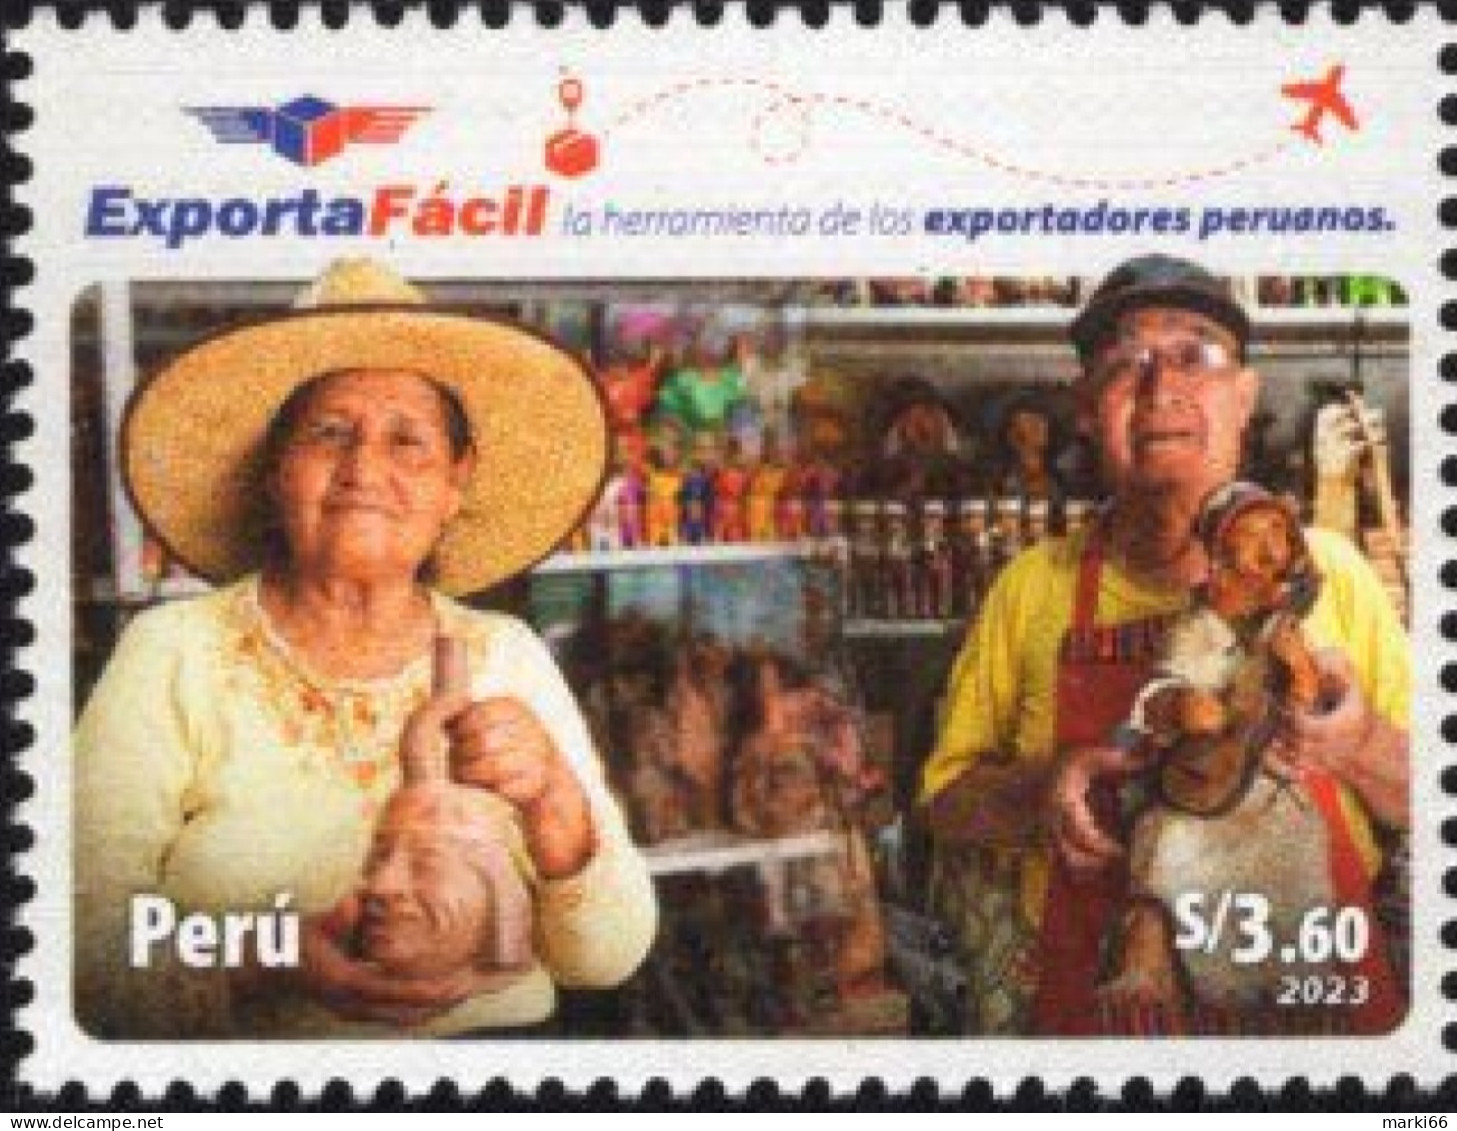 Peru - 2023 - Peruvian Export - Mint Stamp - Pérou